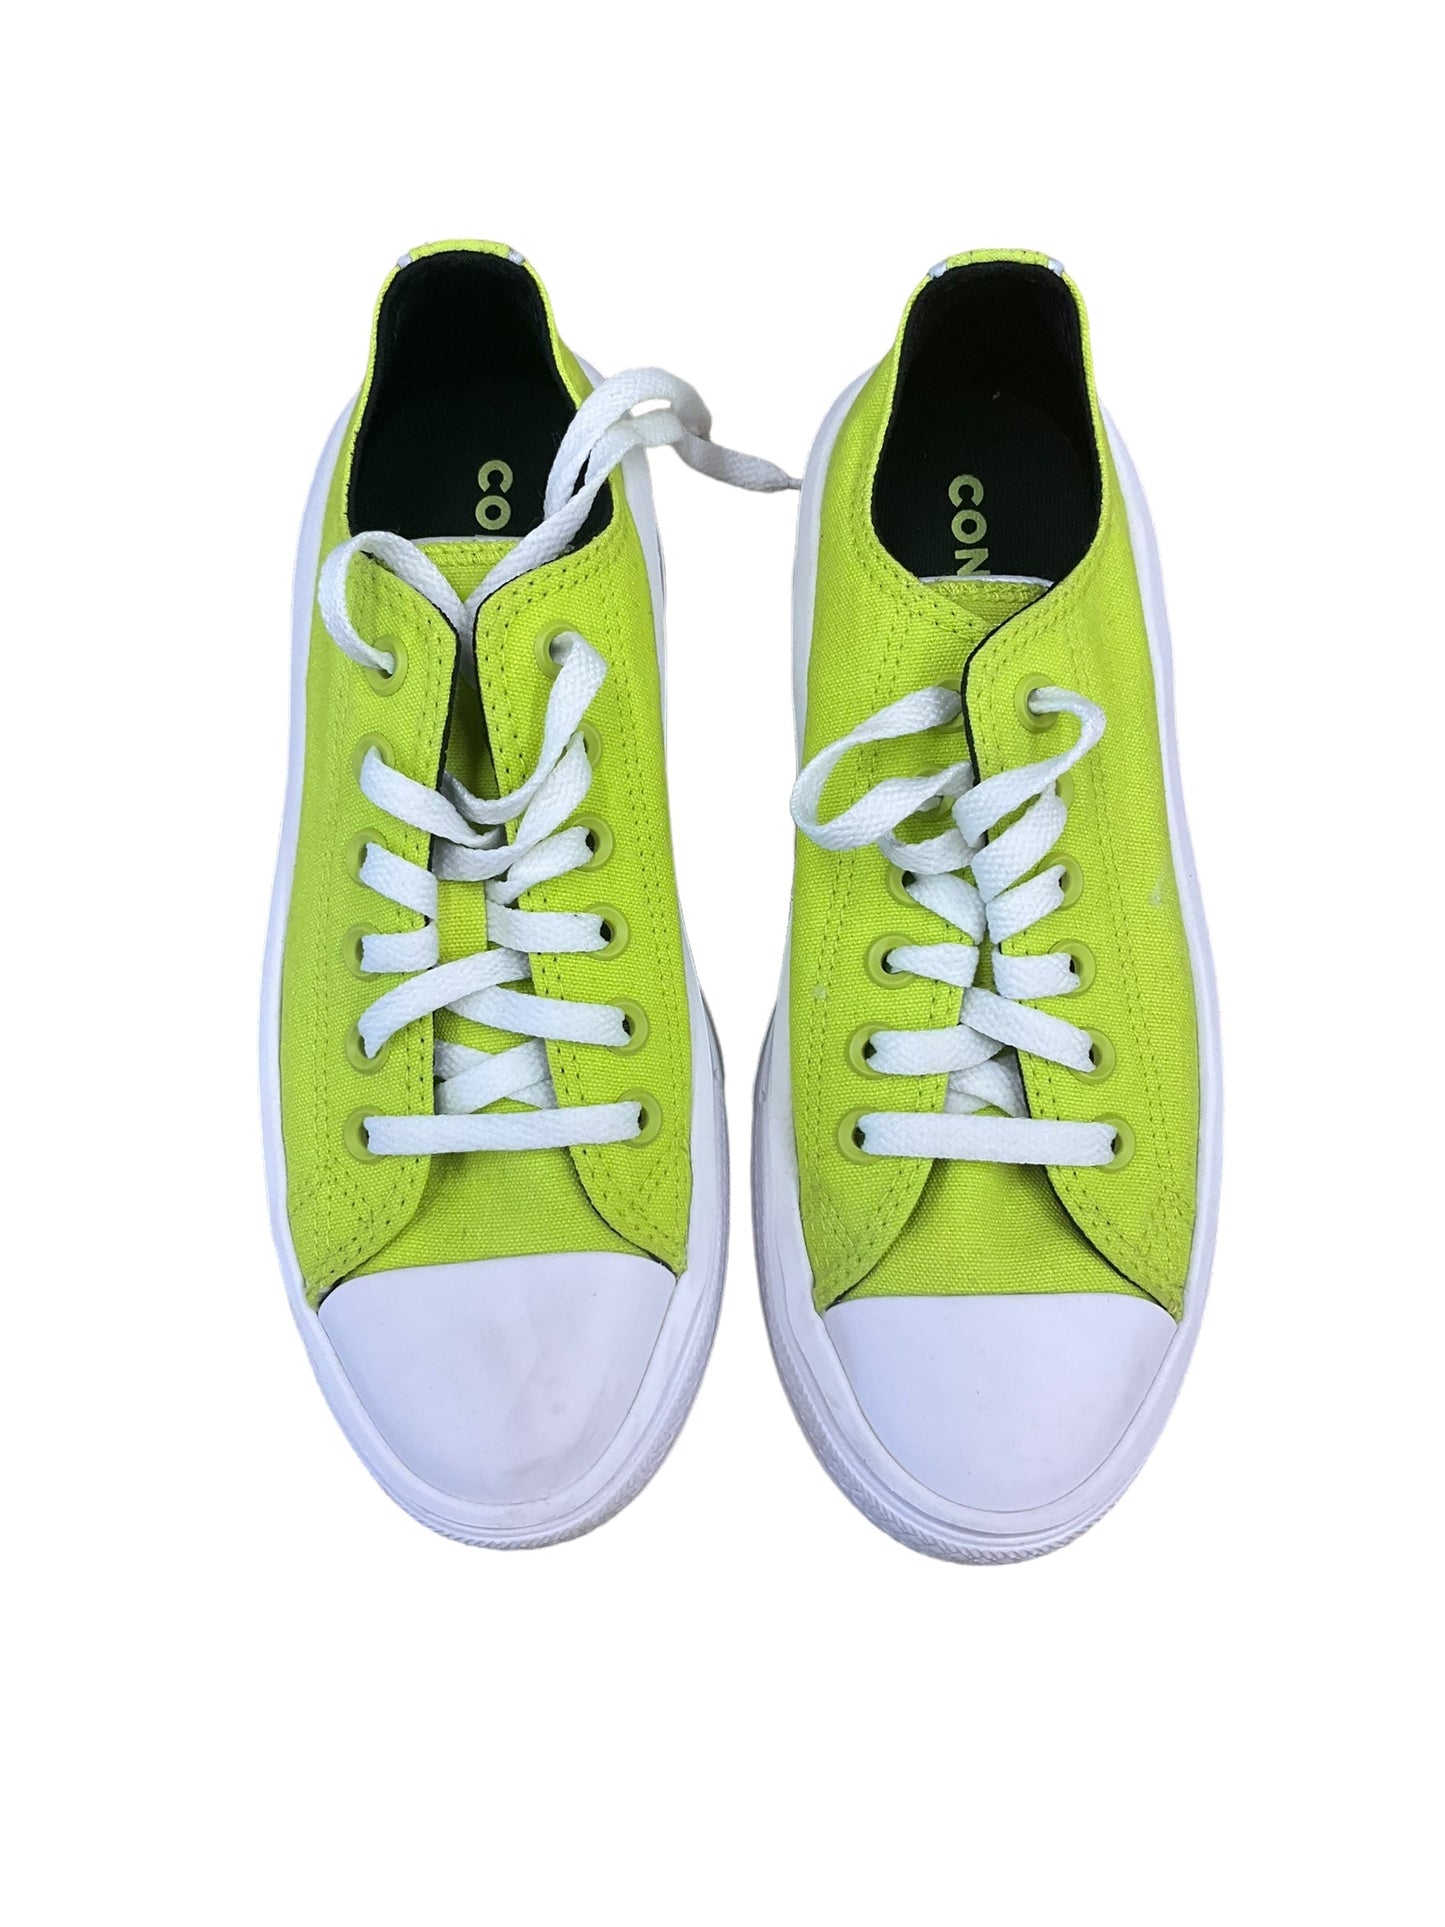 Chartreuse Shoes Sneakers Platform Converse, Size 7